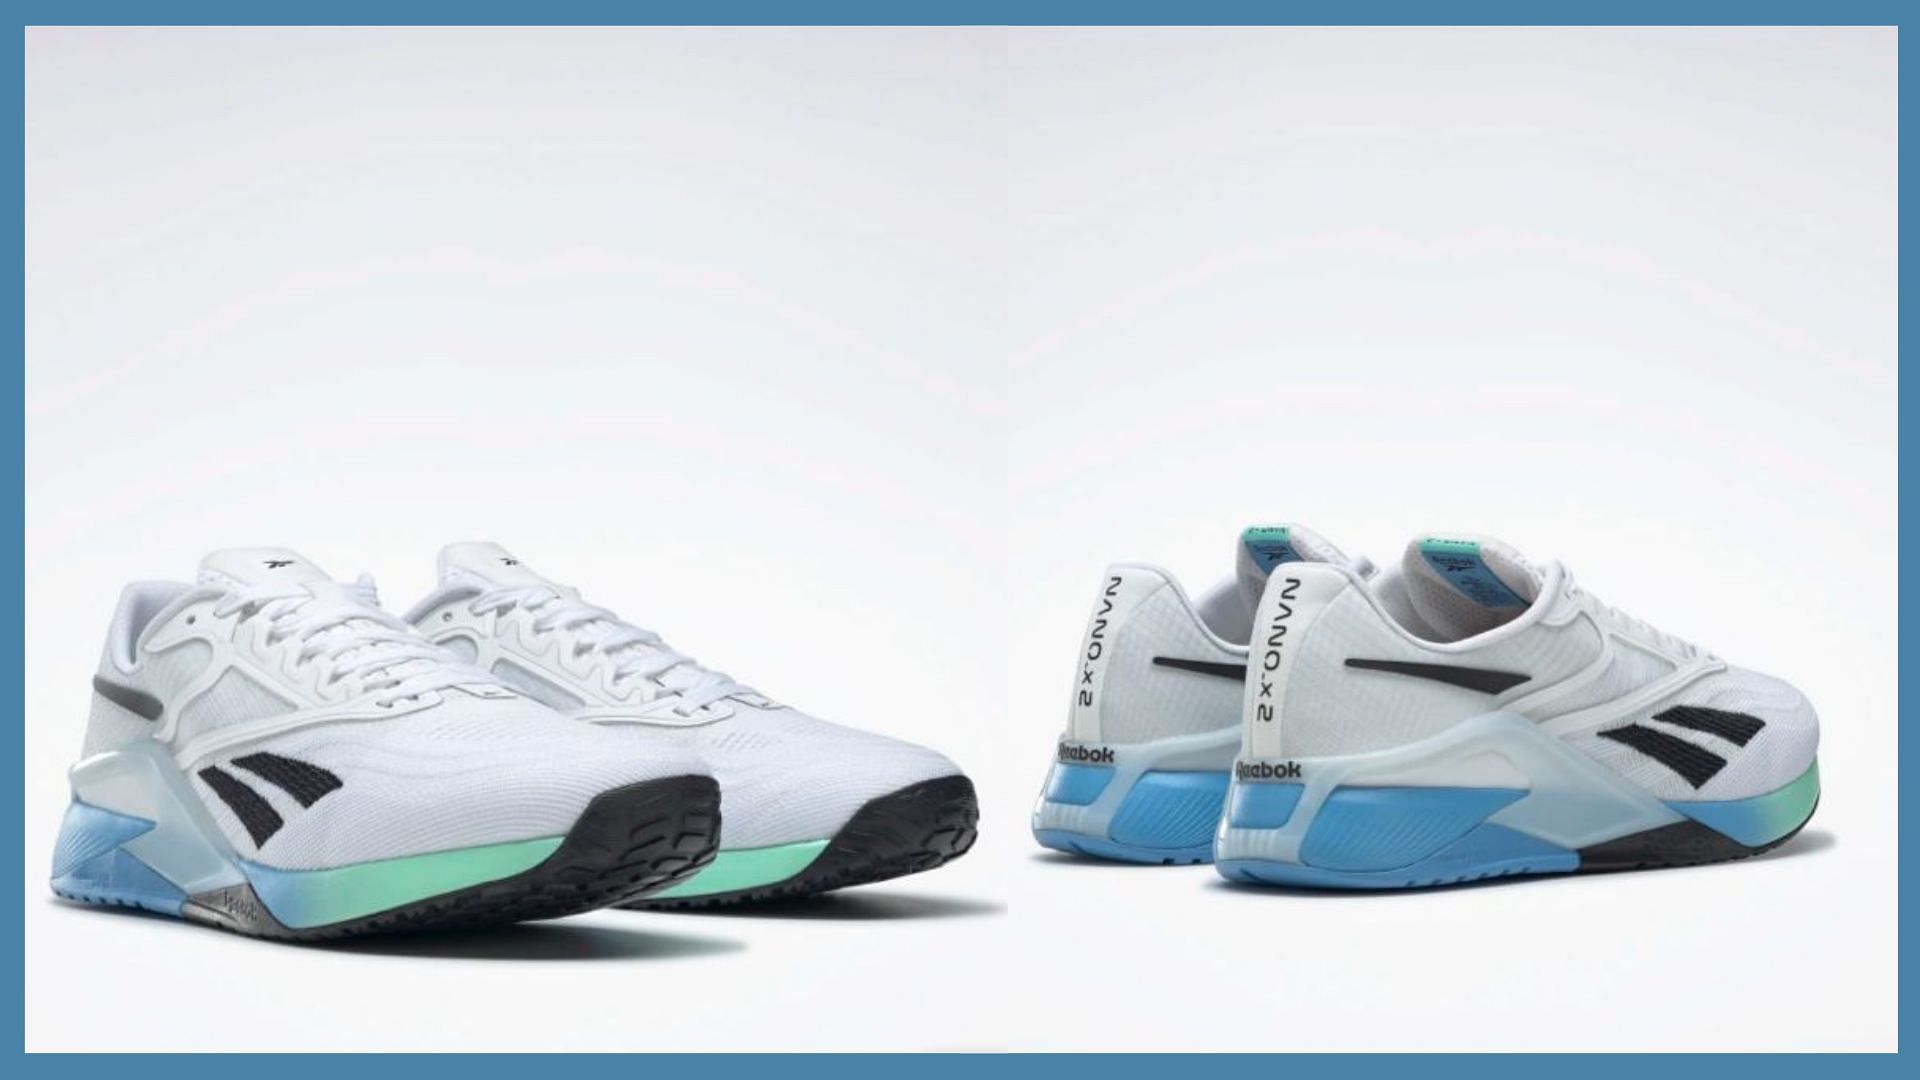 Take a closer look at the Reebok Nano X2 sneakers (Image via Sportskeeda)